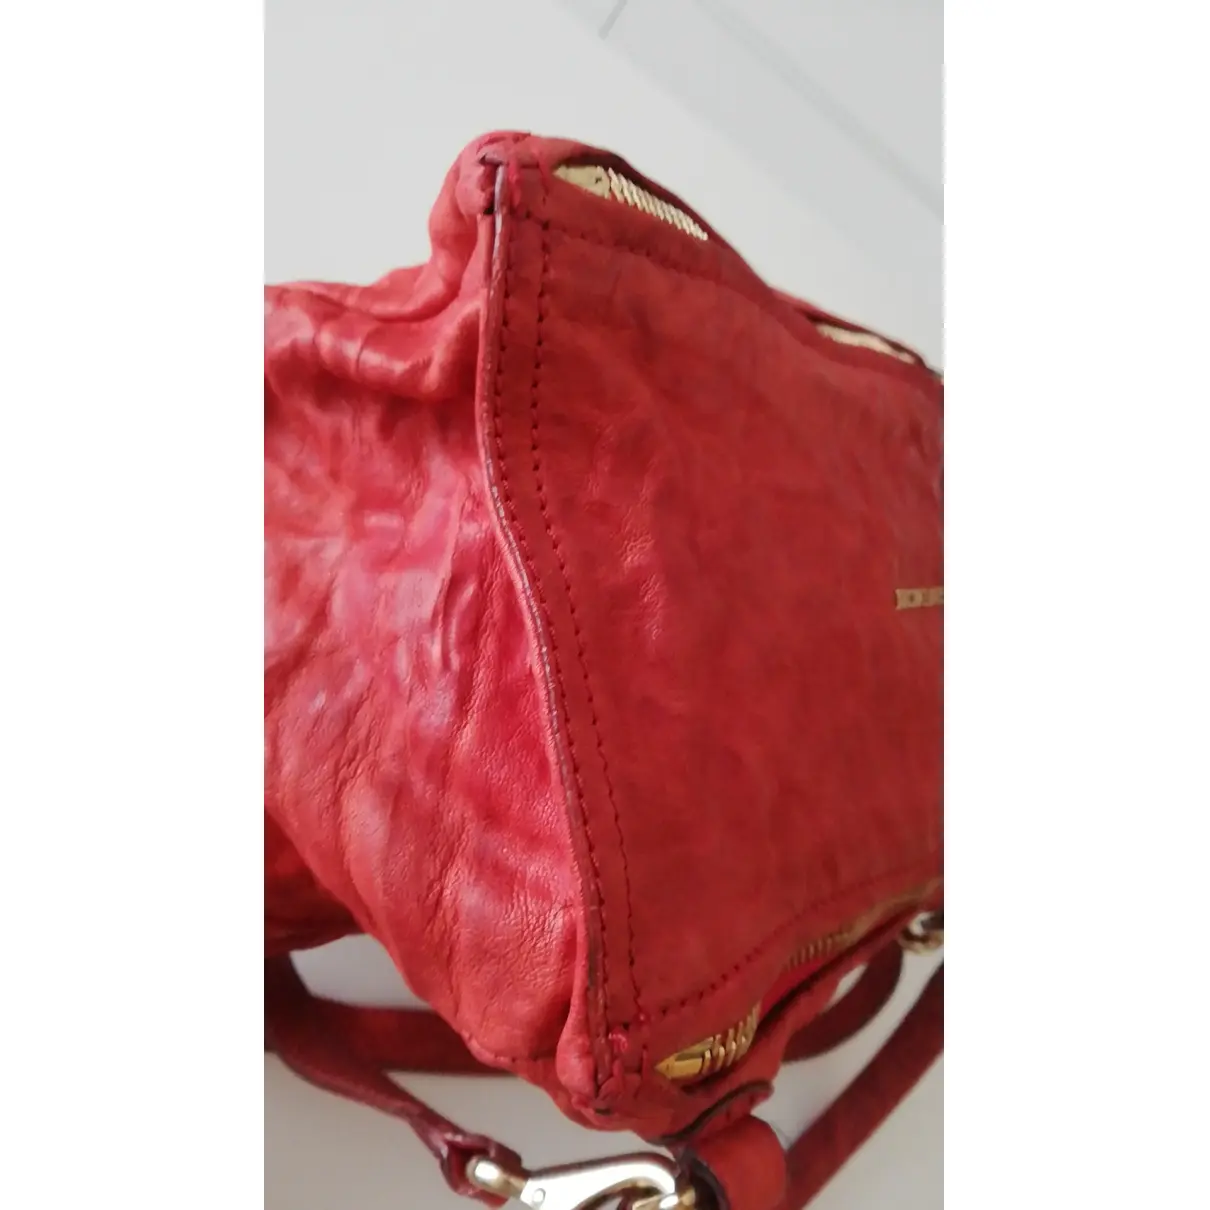 Pandora leather handbag Givenchy